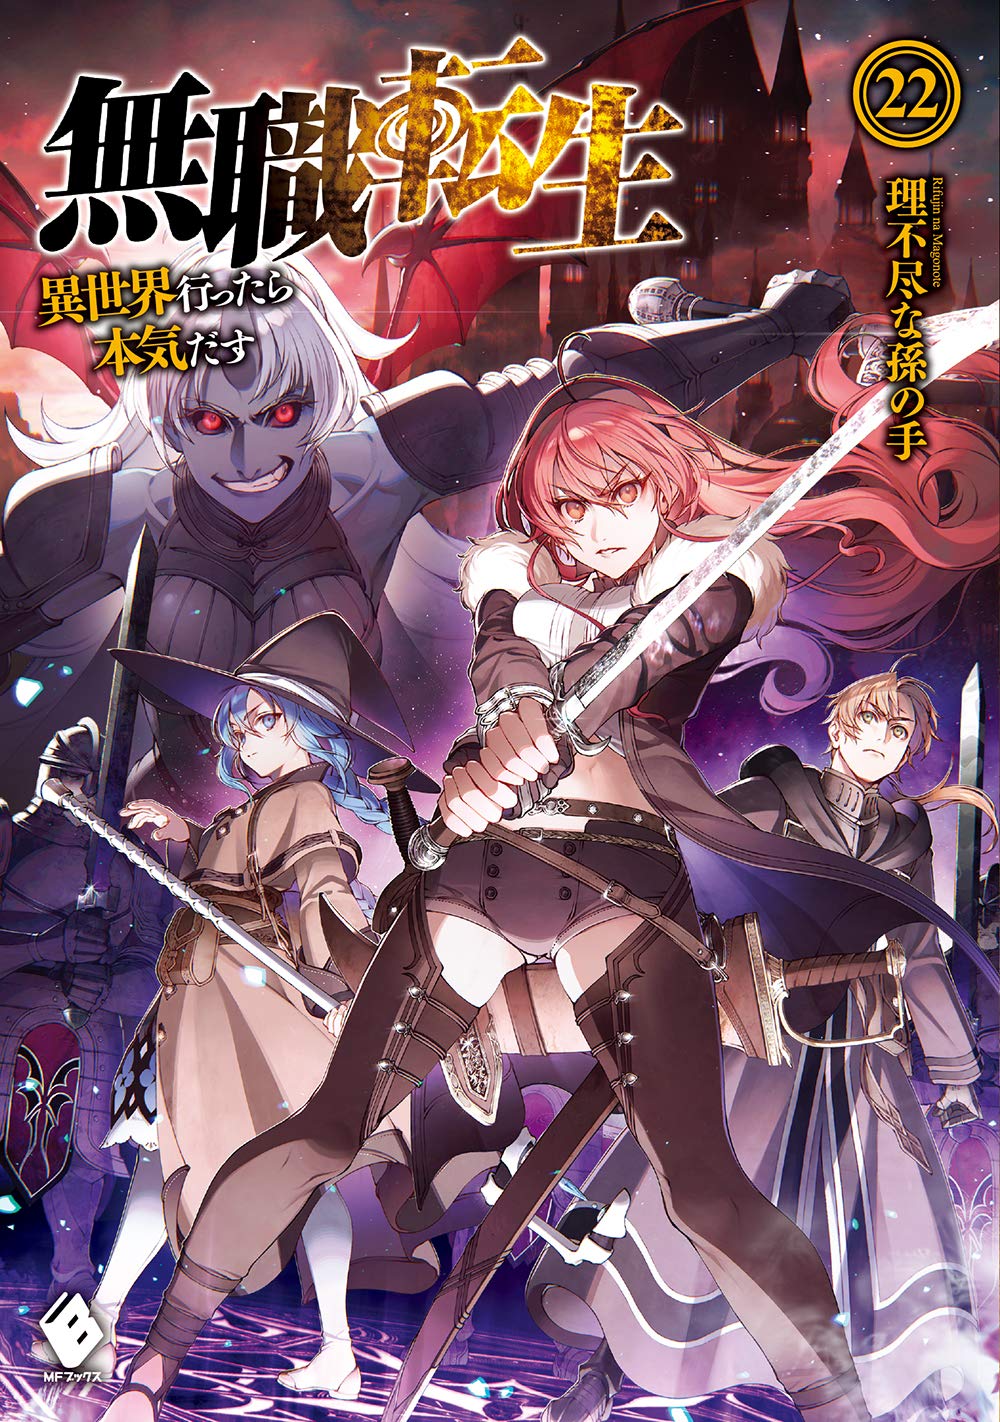 Light Novel Volume 2, Mushoku Tensei Wiki